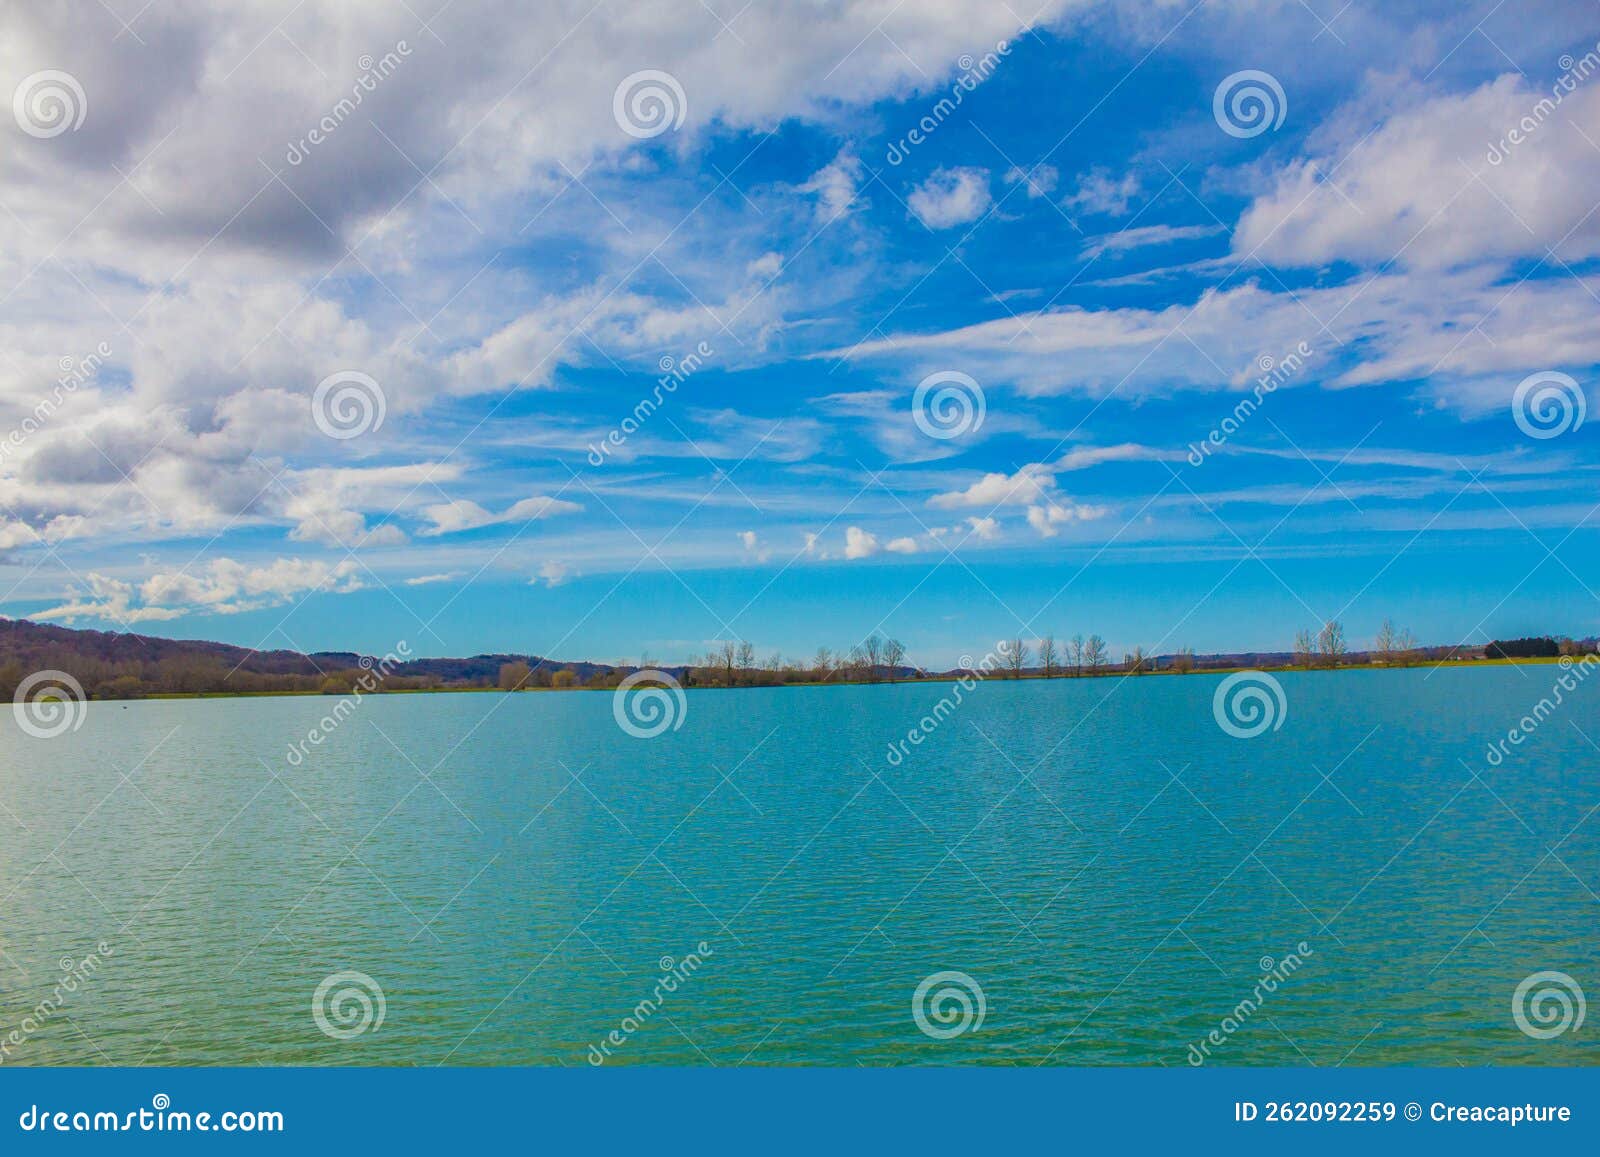 peacefull lake